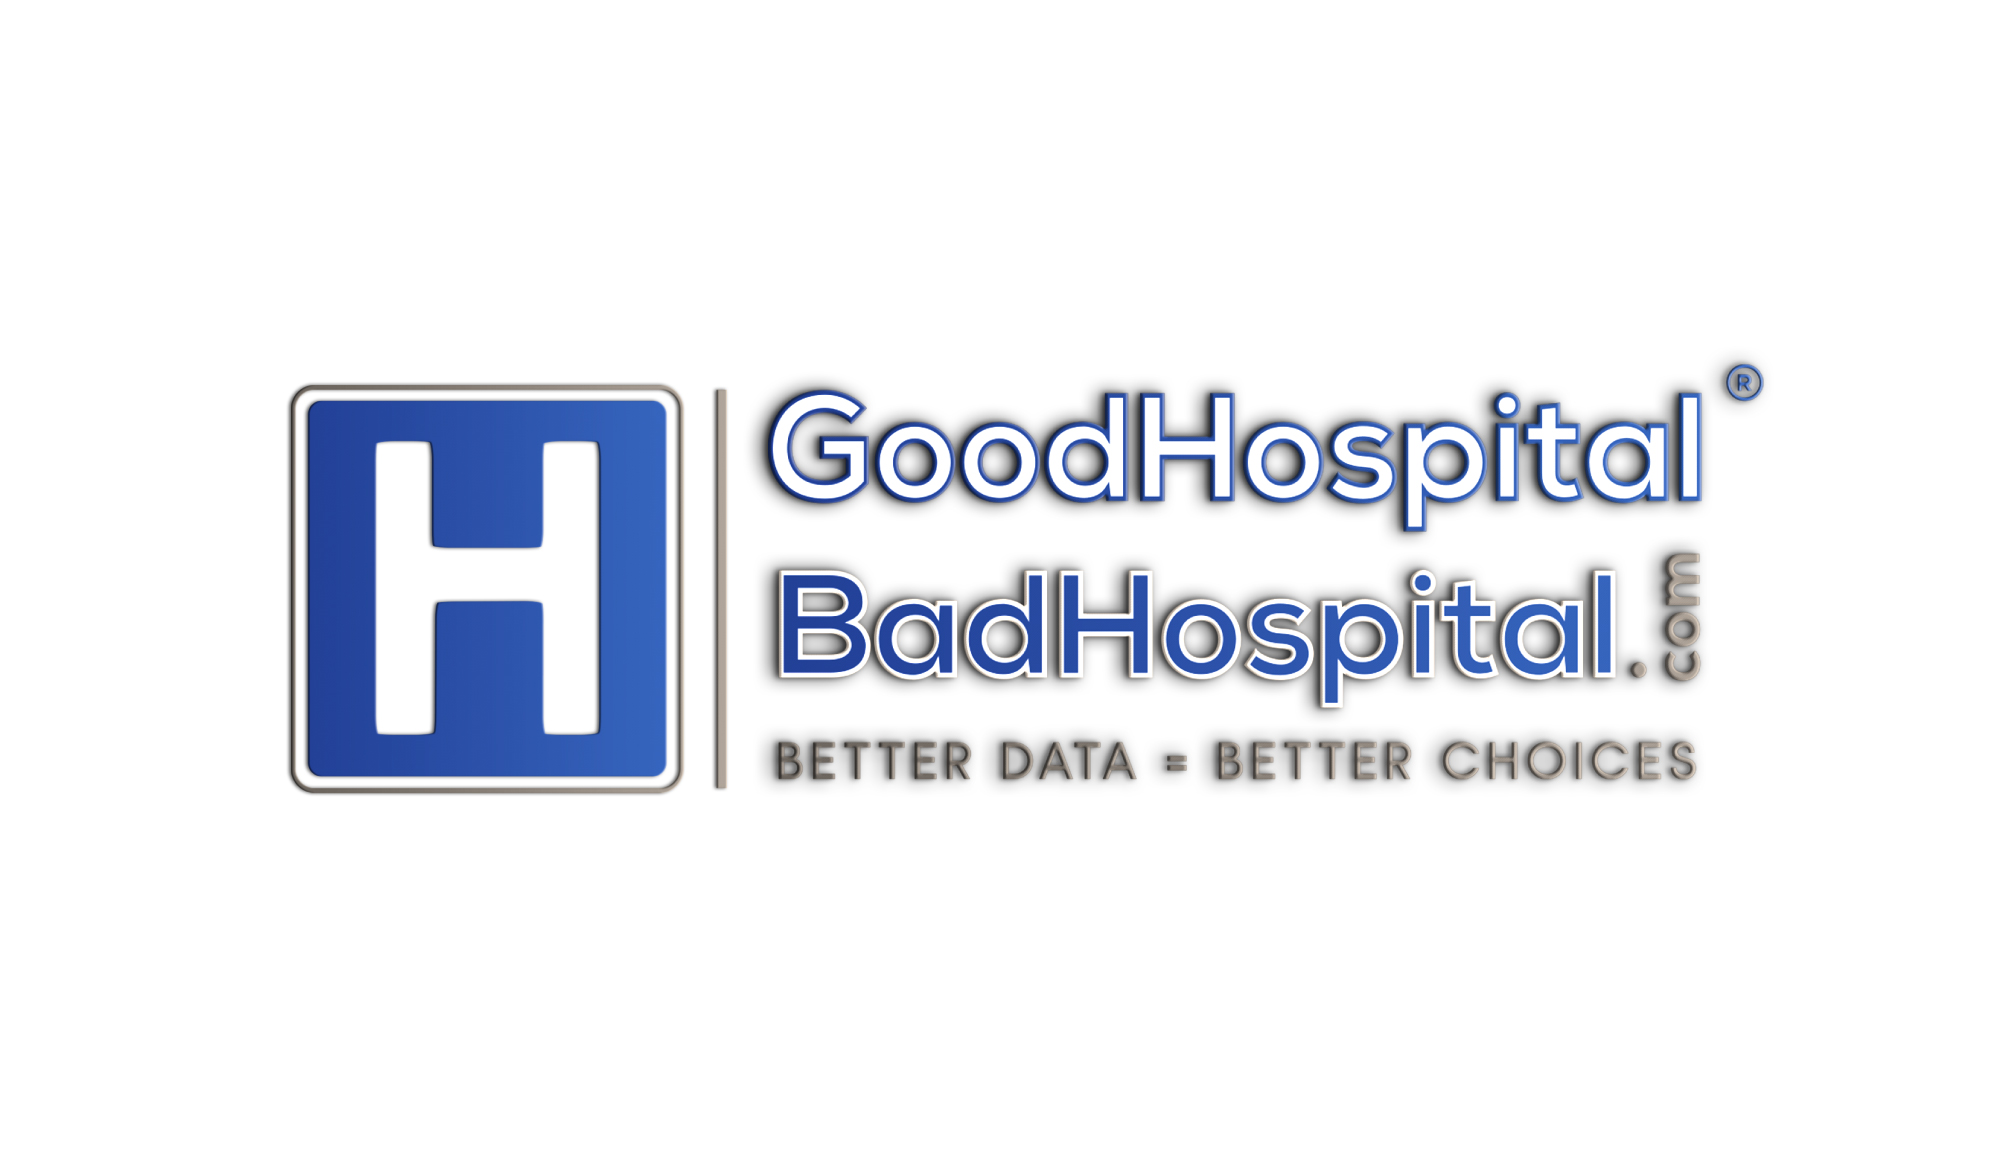 GoodHospitalBadHospital.com